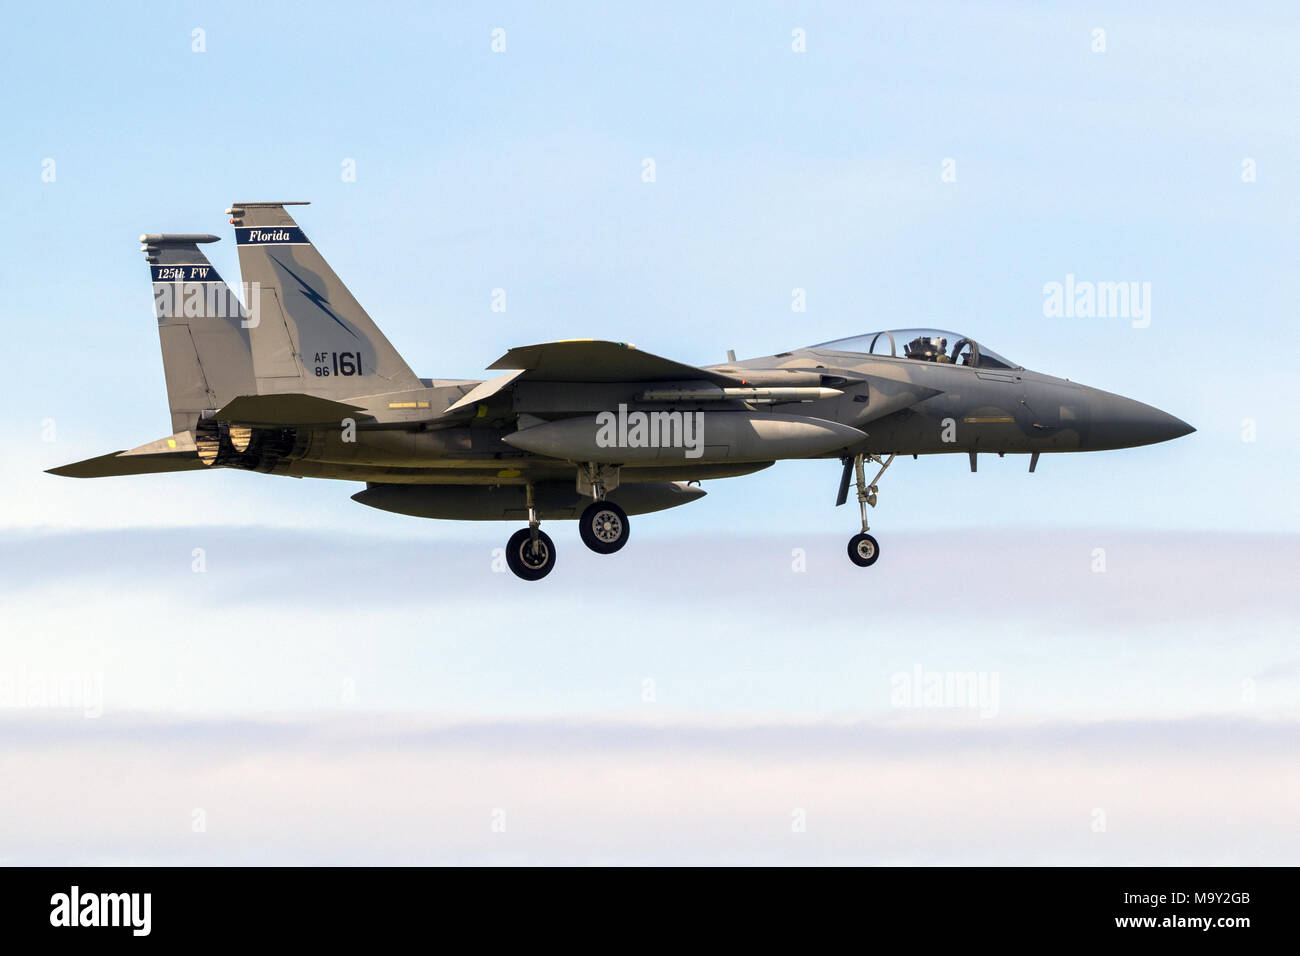 LEEUWARDEN, Niederlande - Apr 5, 2017: US Air Force F-15 Eagle fighter Jets landen während der Übung Frisian Flag. Stockfoto